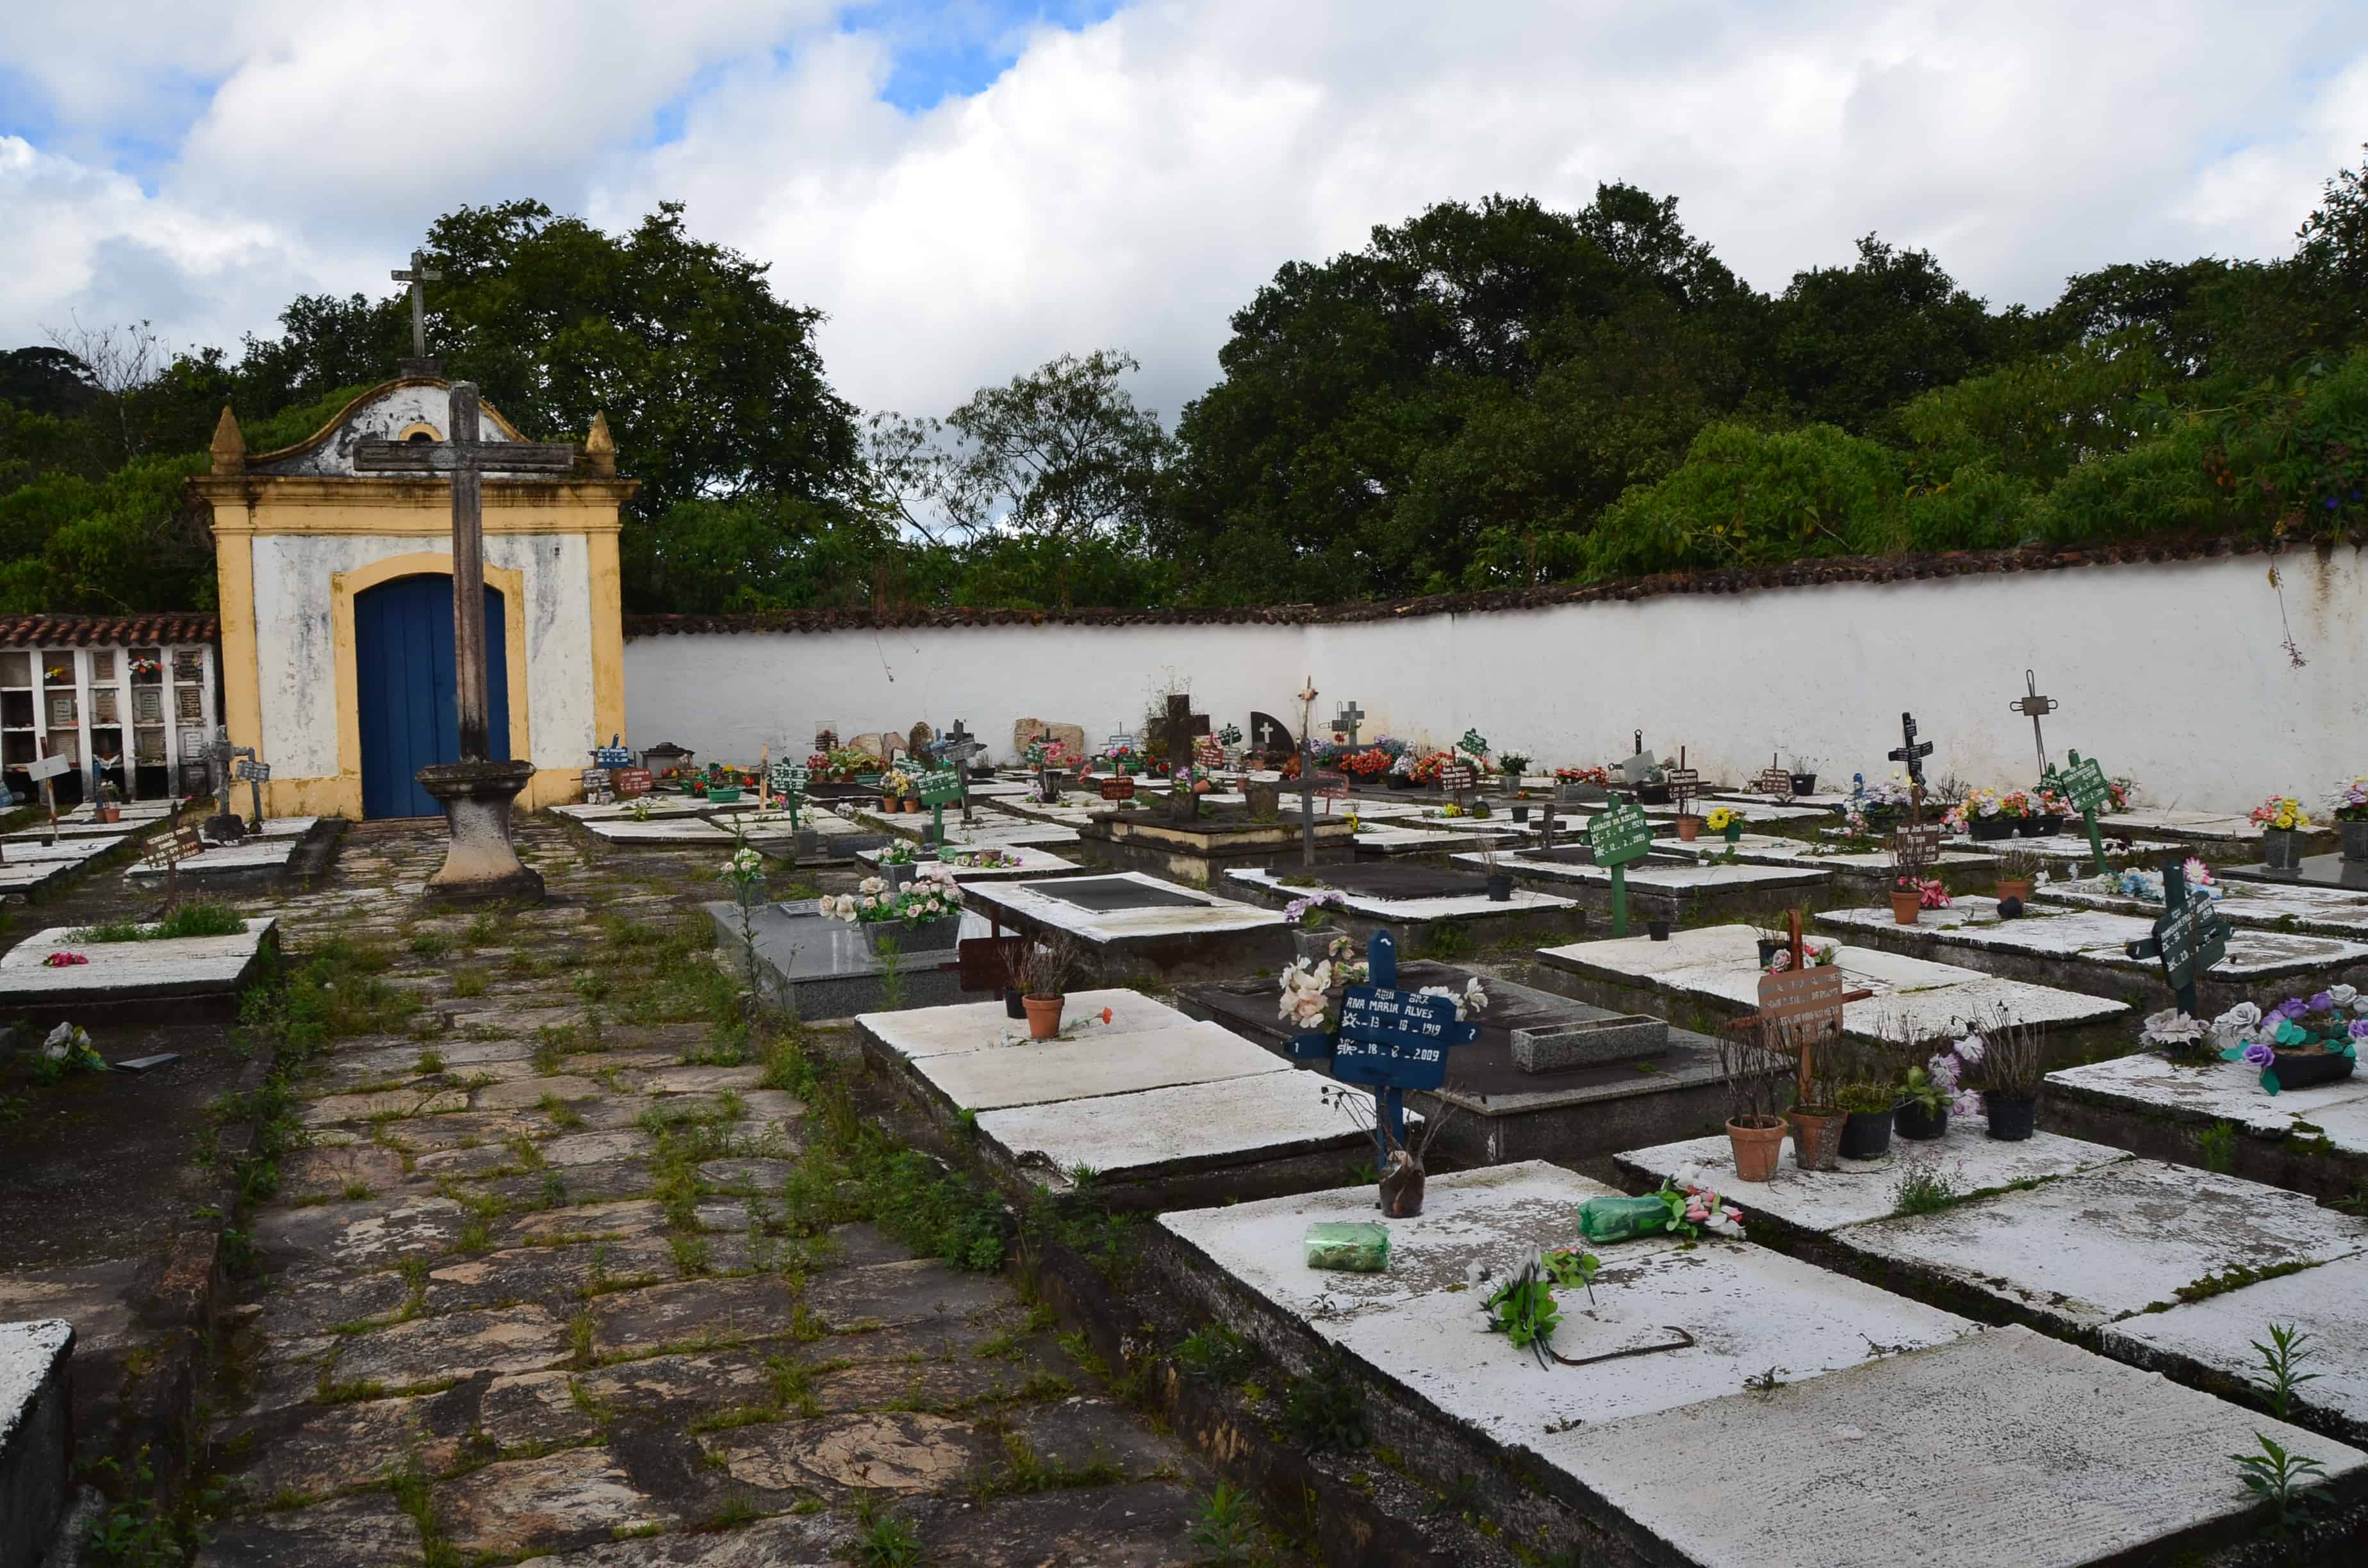 Cemitério São Francisco de Paula in Ouro Preto, Brazil